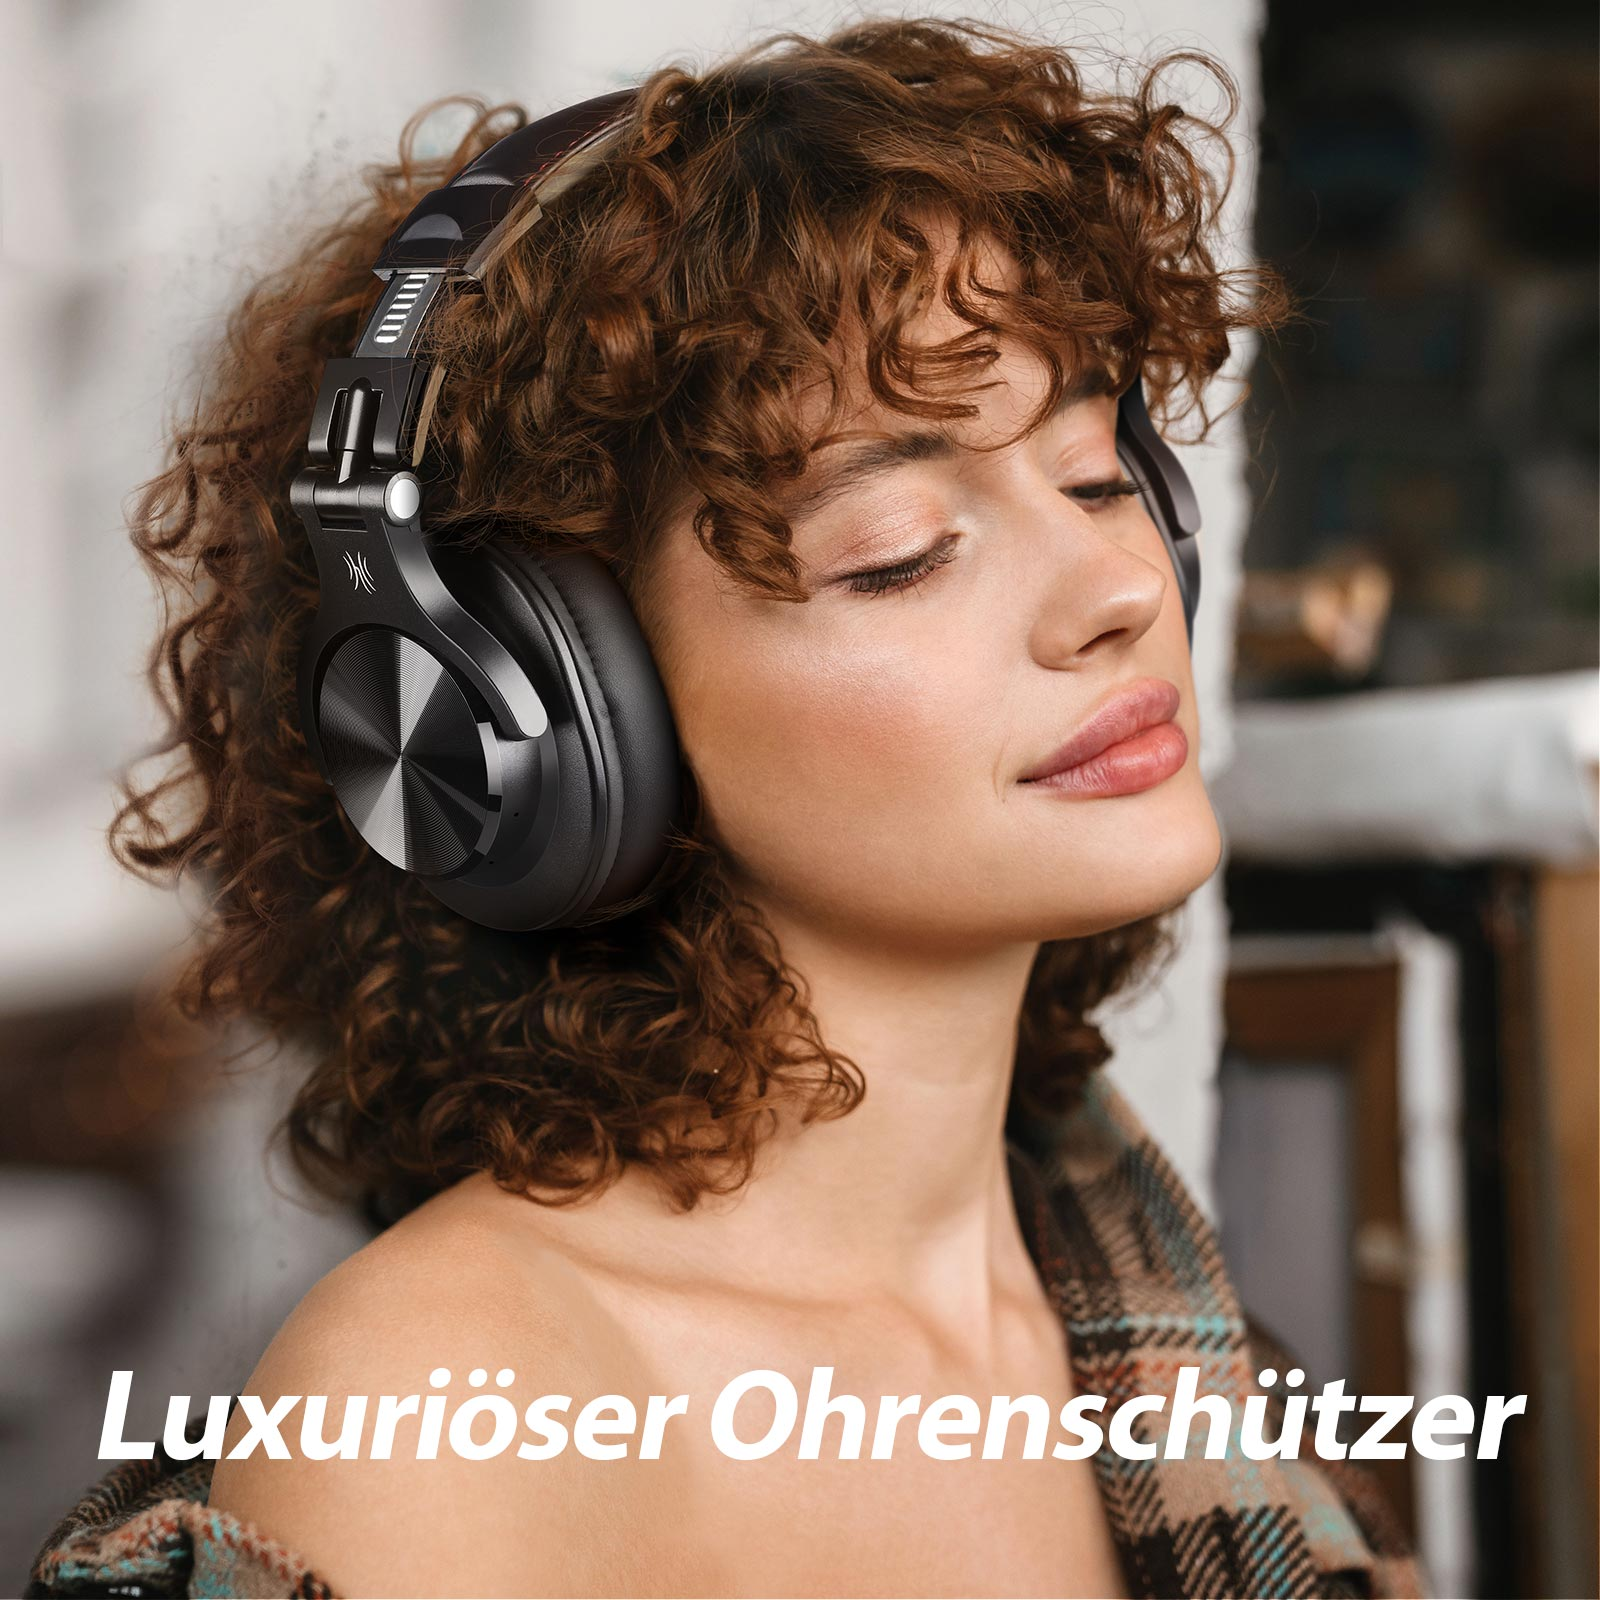 ONEODIO A70 Headphones, Gold Bluetooth-Kopfhörer Over-ear